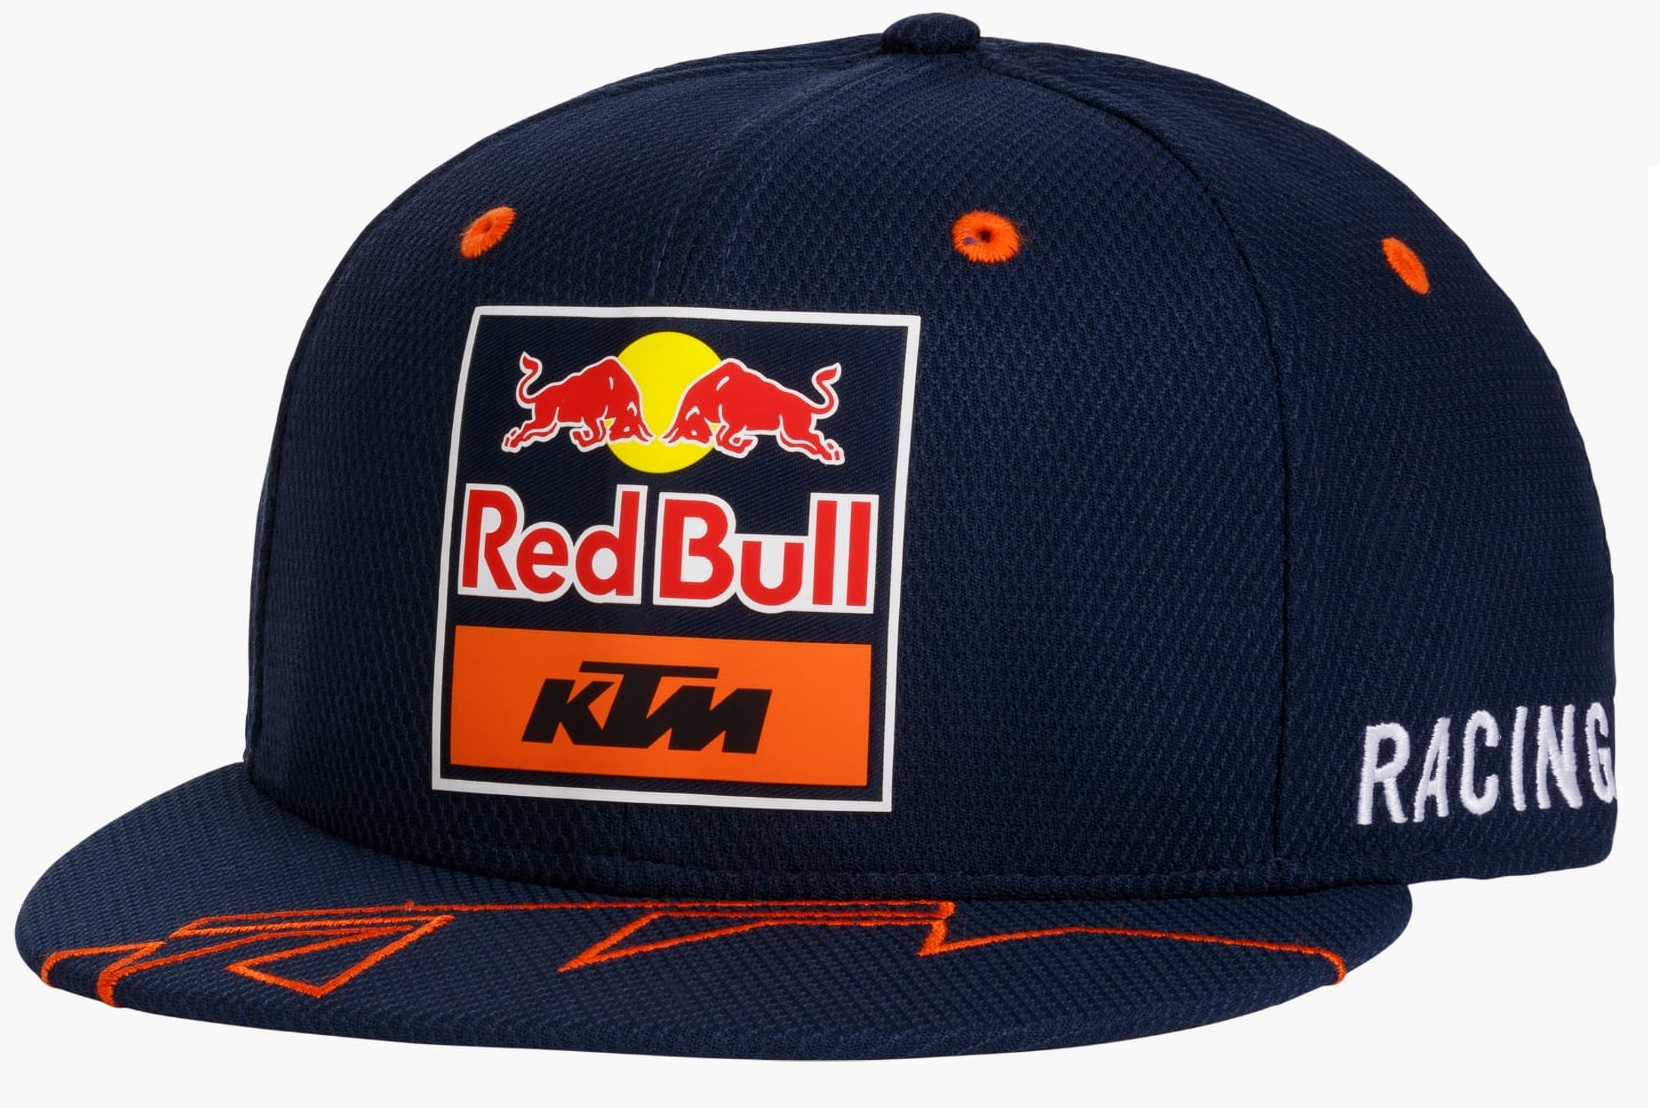 Red Bull KTM Racing Team New Era Official Teamline Hat